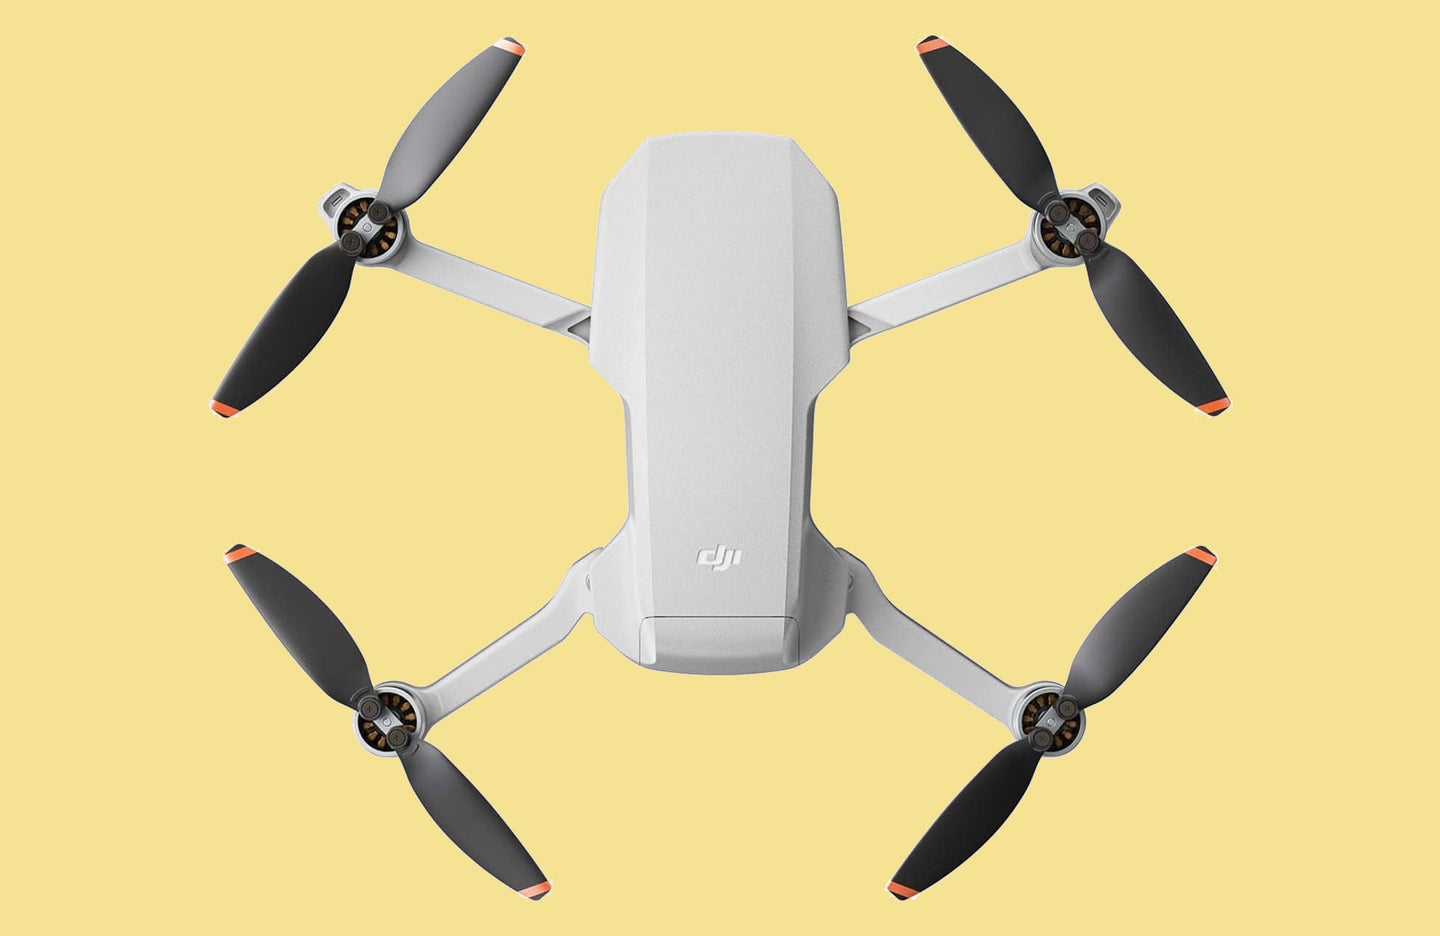 DJI Mini 2 drone from above on yellow